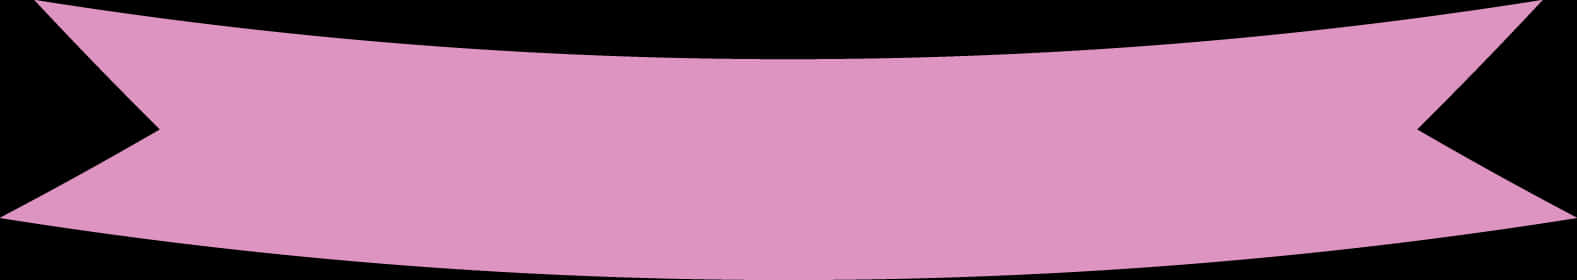 Pink Banner Ribbon Graphic PNG image